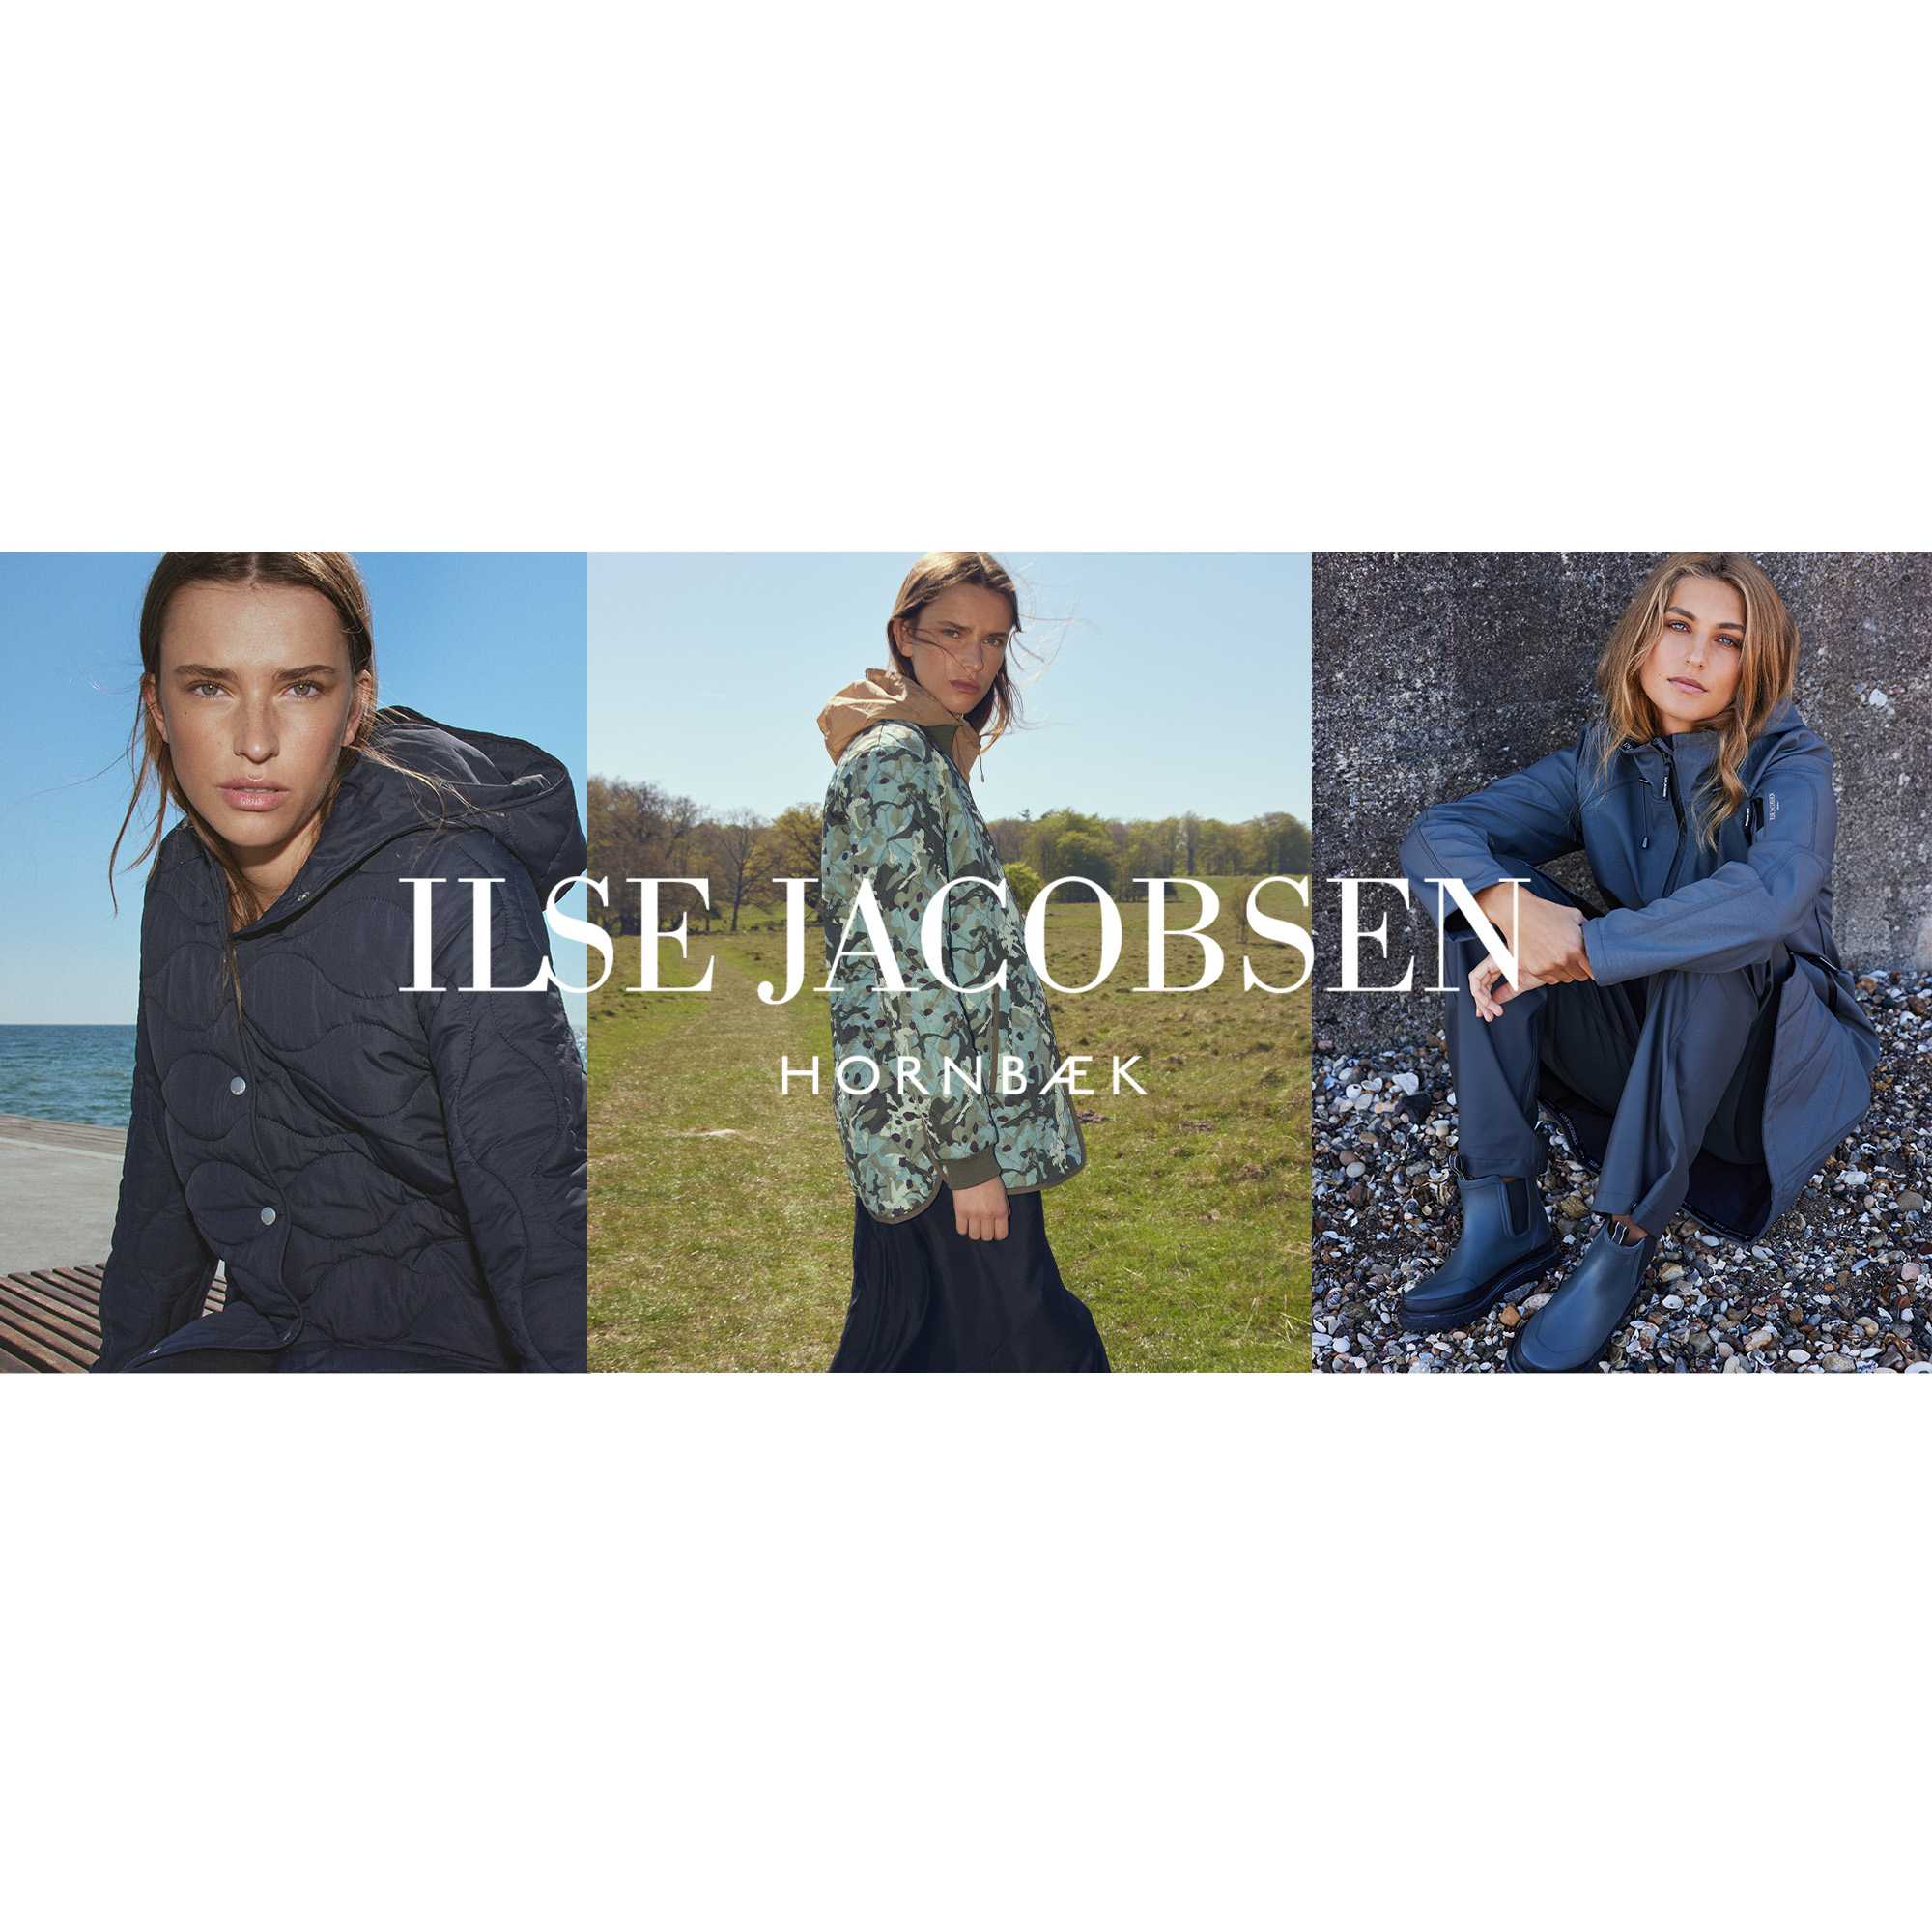 Discover Ilse Jacobsen.